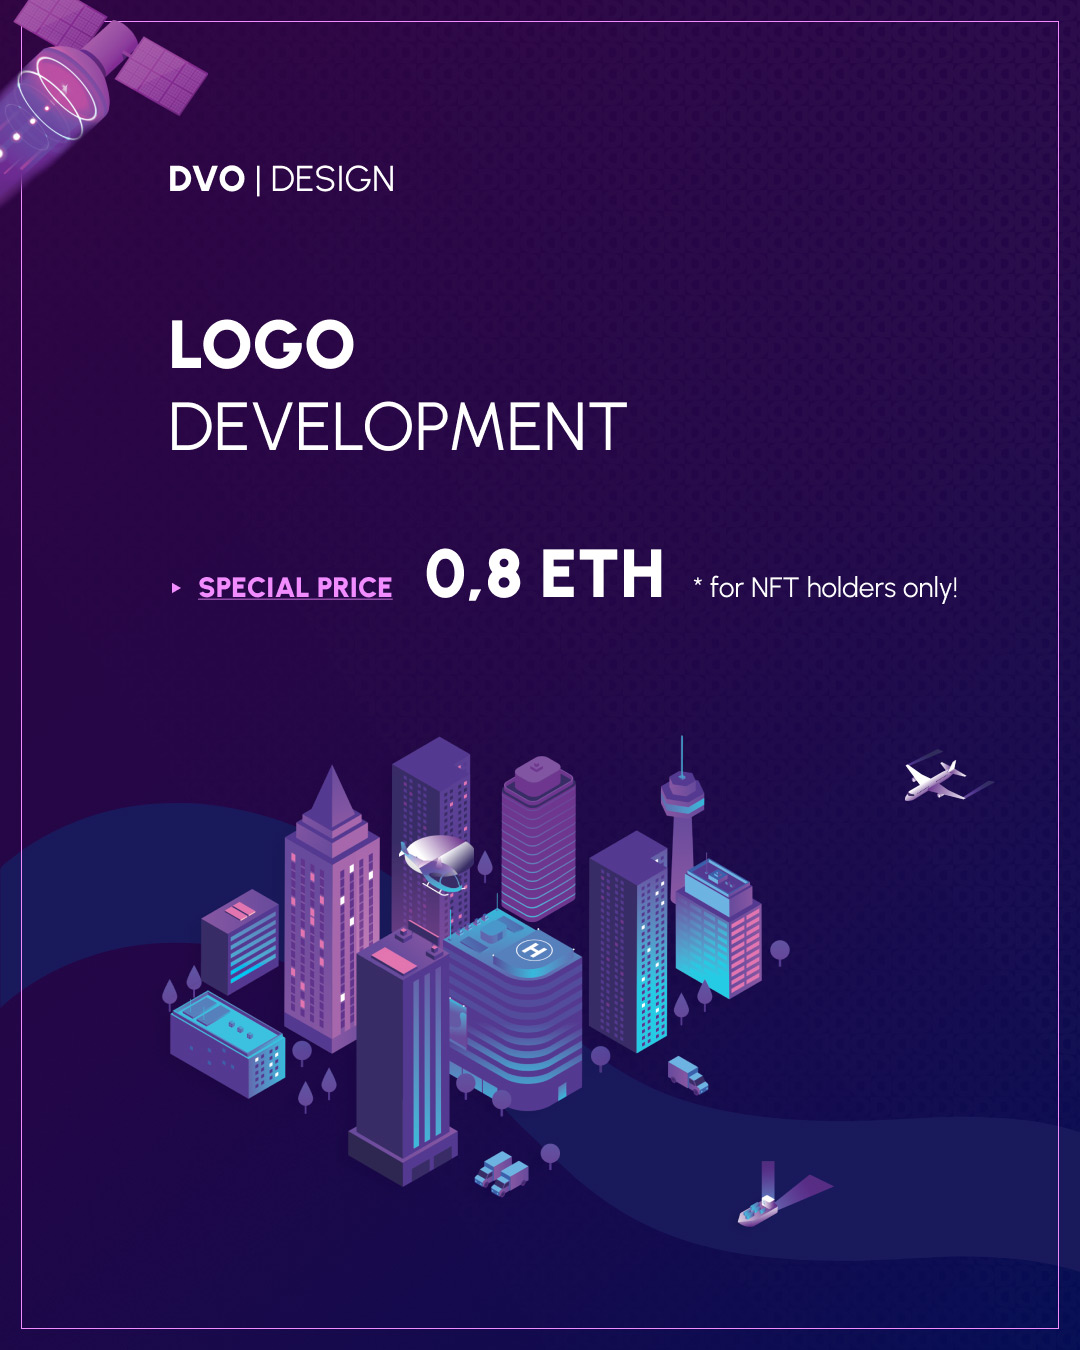 Logo development | Dvo Design